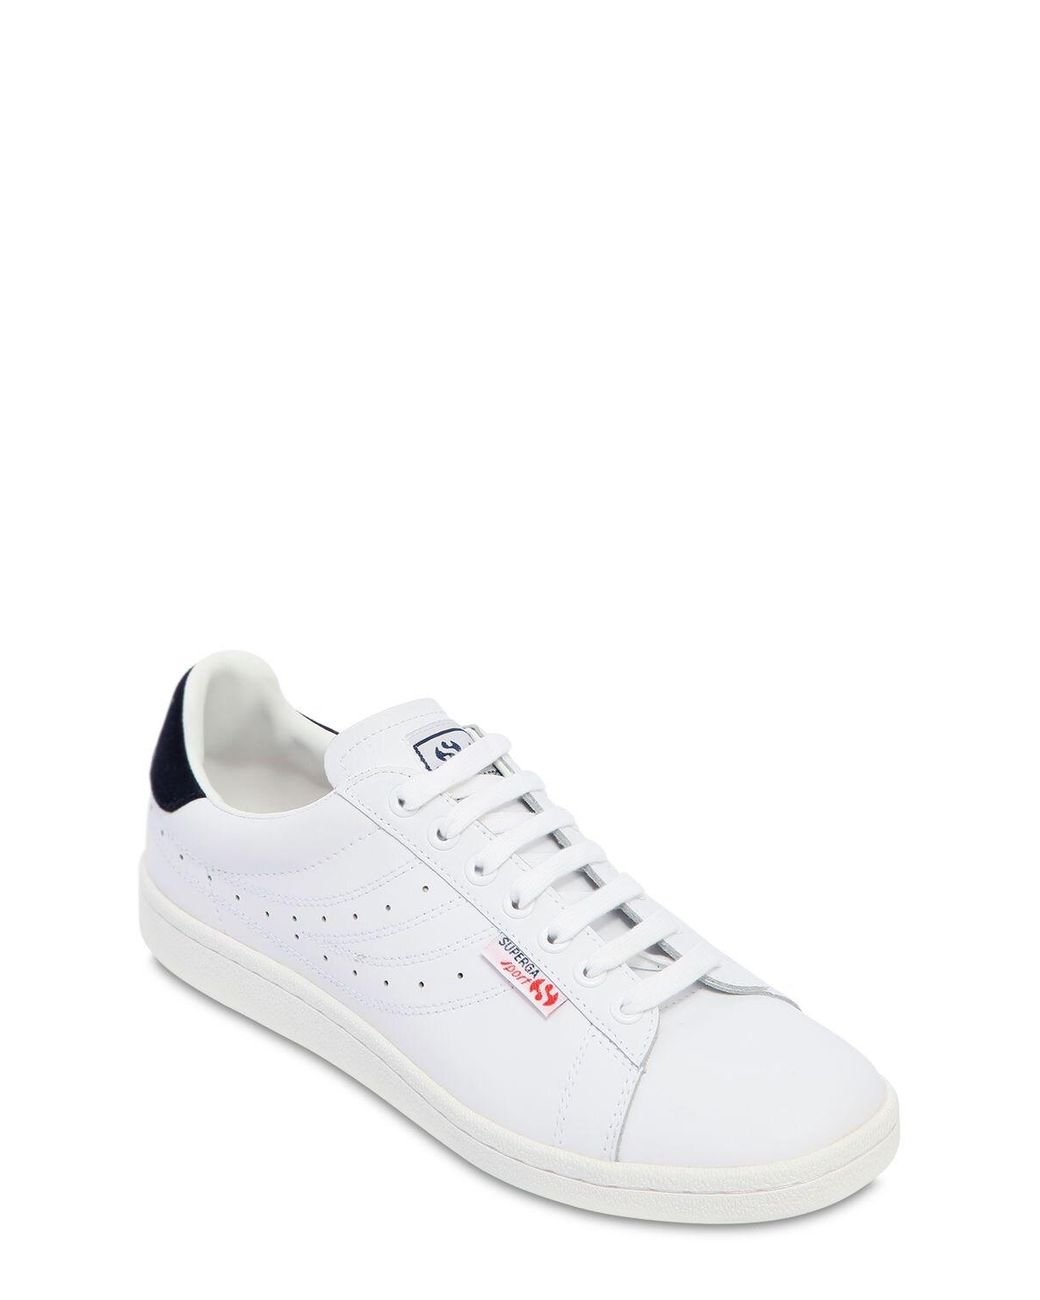 Superga Ivan Lendl Leather Sneakers in White for Men | Lyst